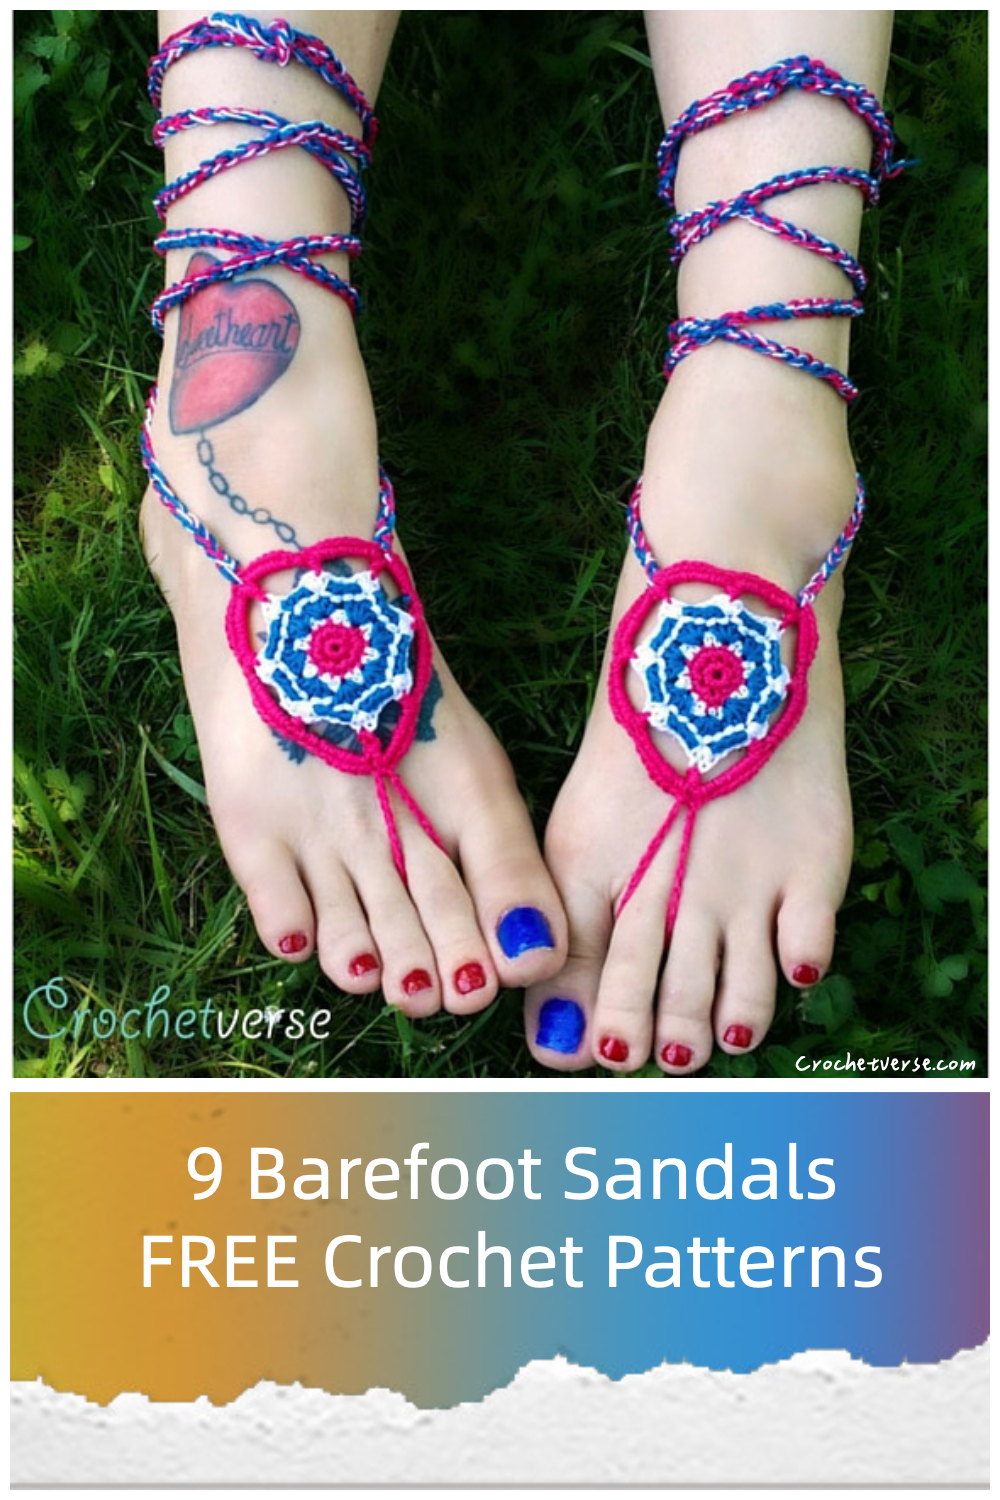 9 Barefoot Sandals FREE Crochet Patterns 